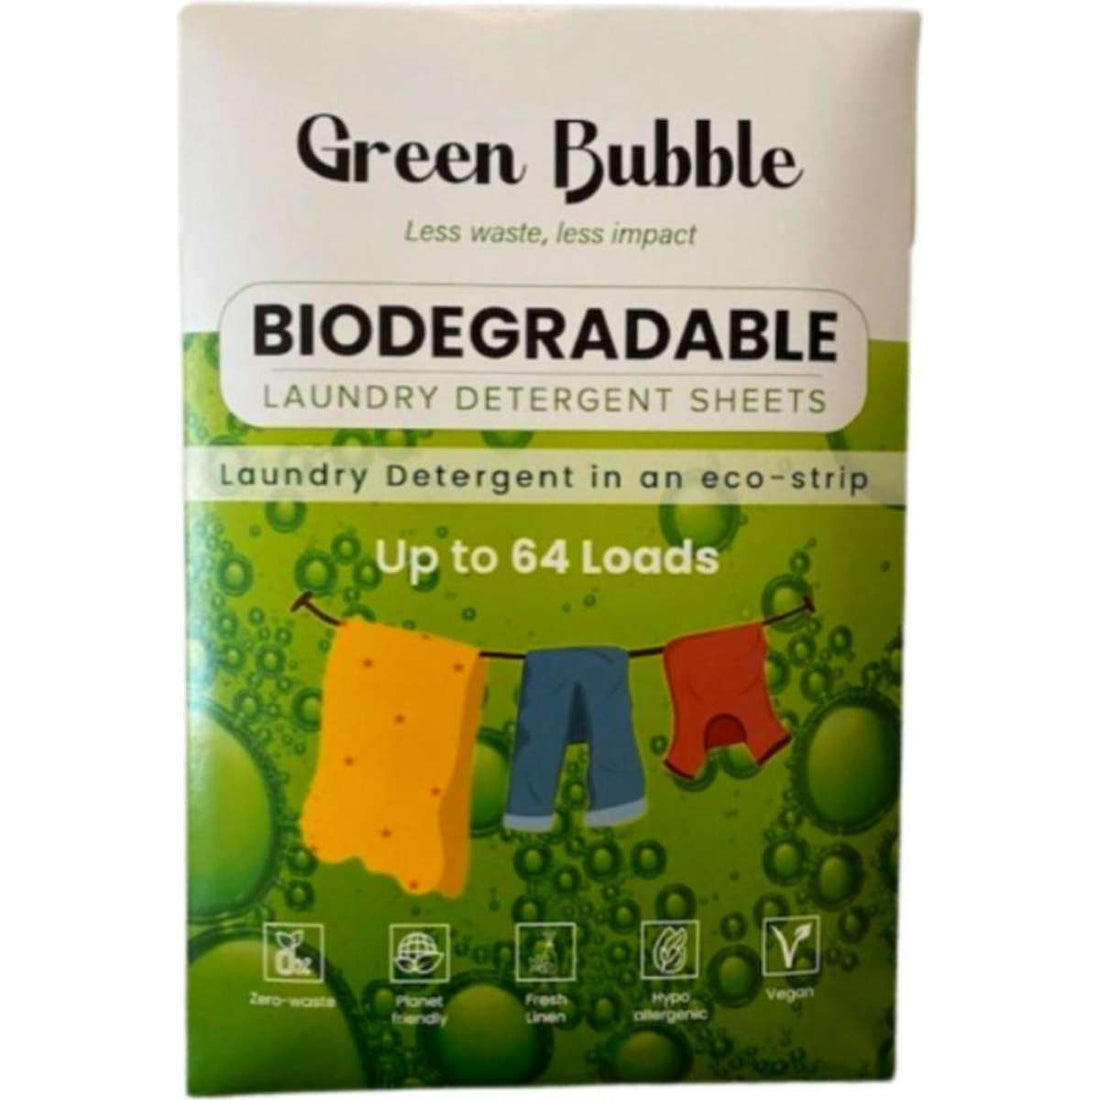 Green Bubble Biodegradable Laundry Detergent Sheets 64 Loads